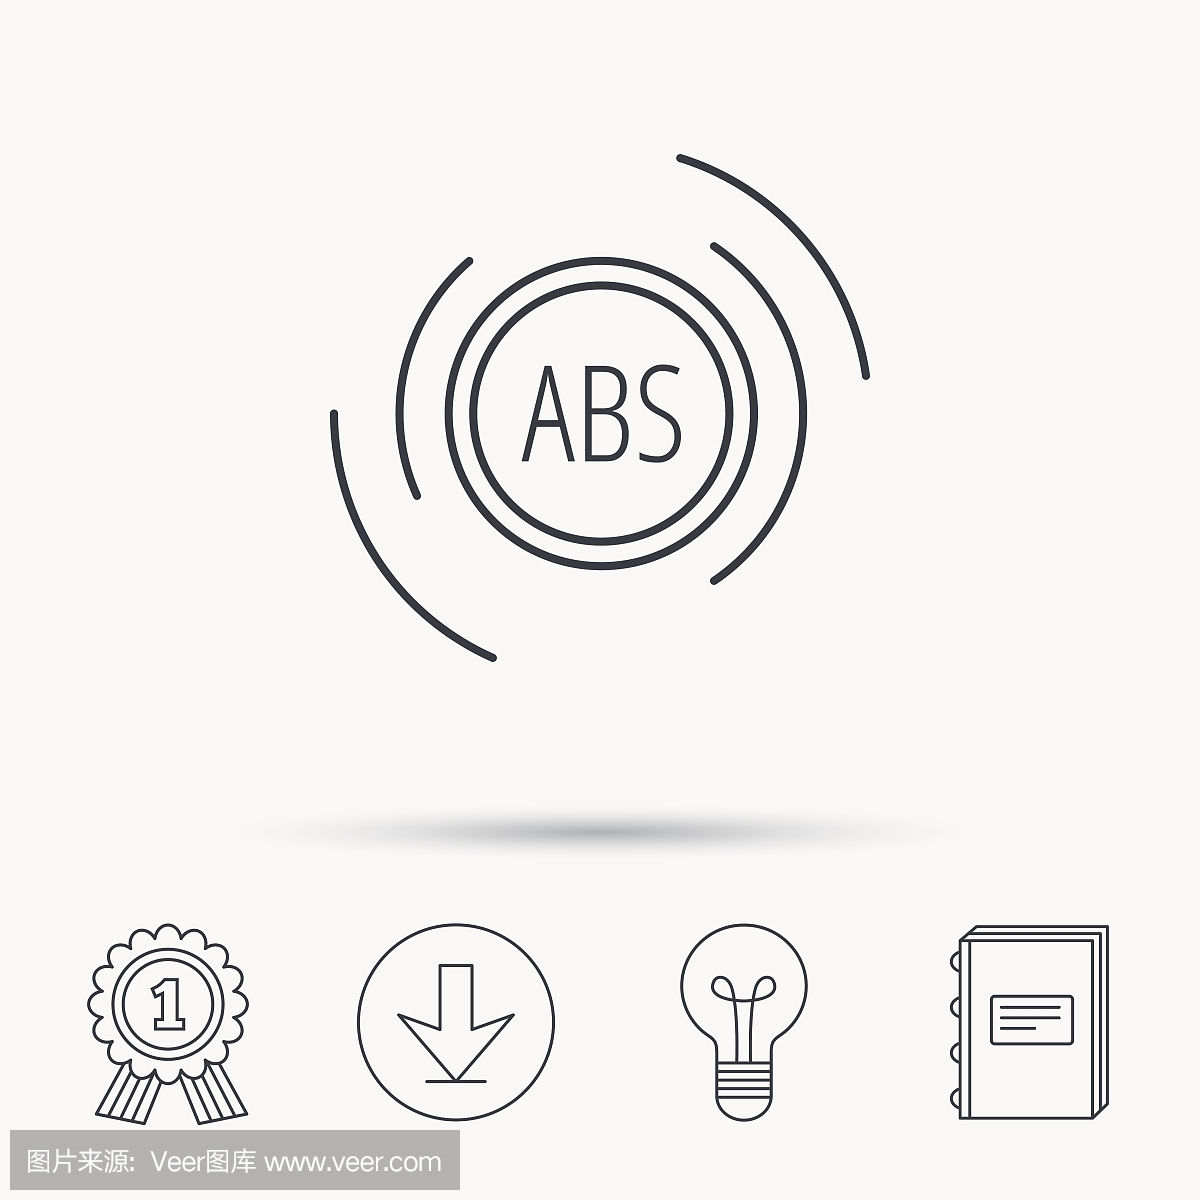 ABS图标。制动器防抱死系统标志。